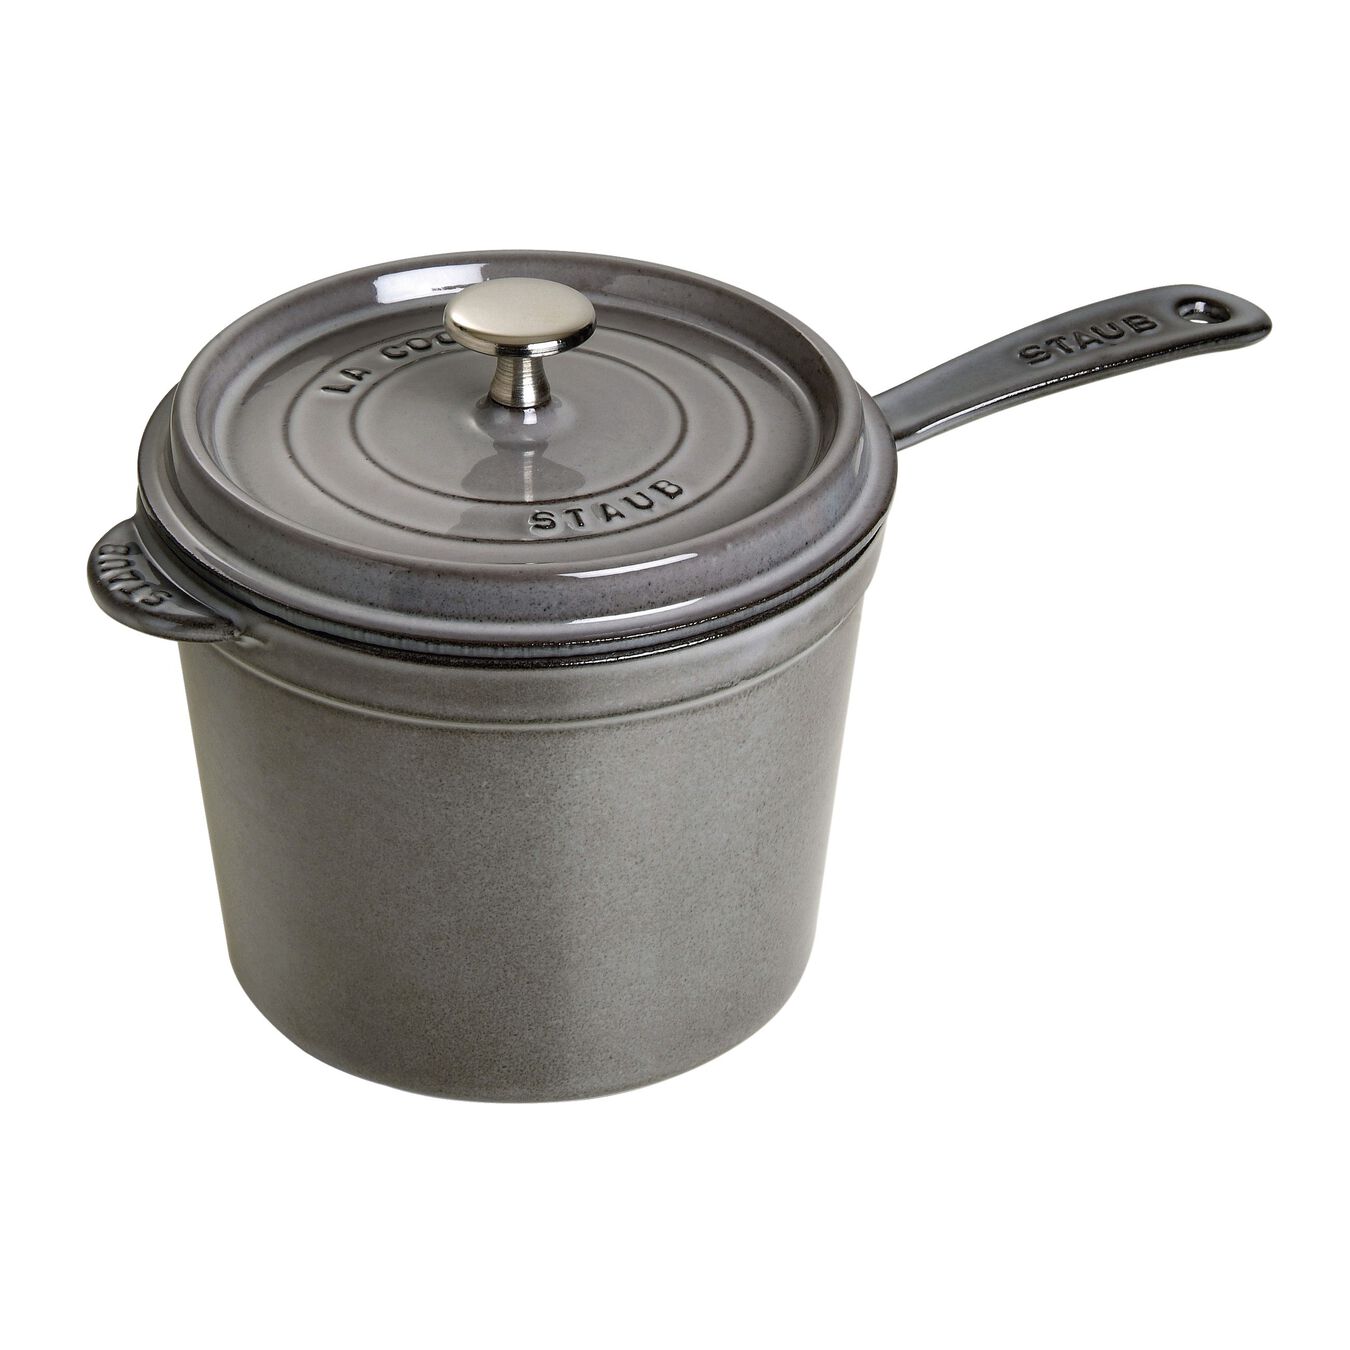 2.8 l cast iron round Sauce pan, graphite-grey,,large 2